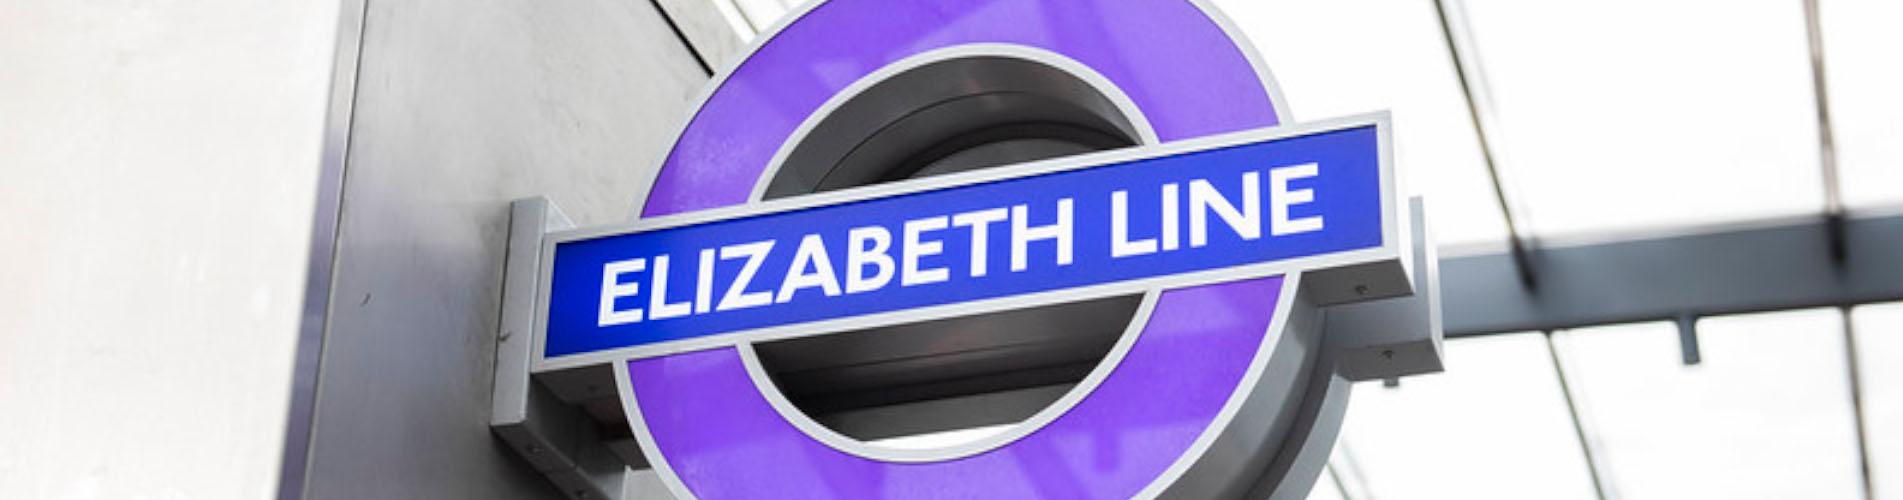 London's Elizabeth line roundel